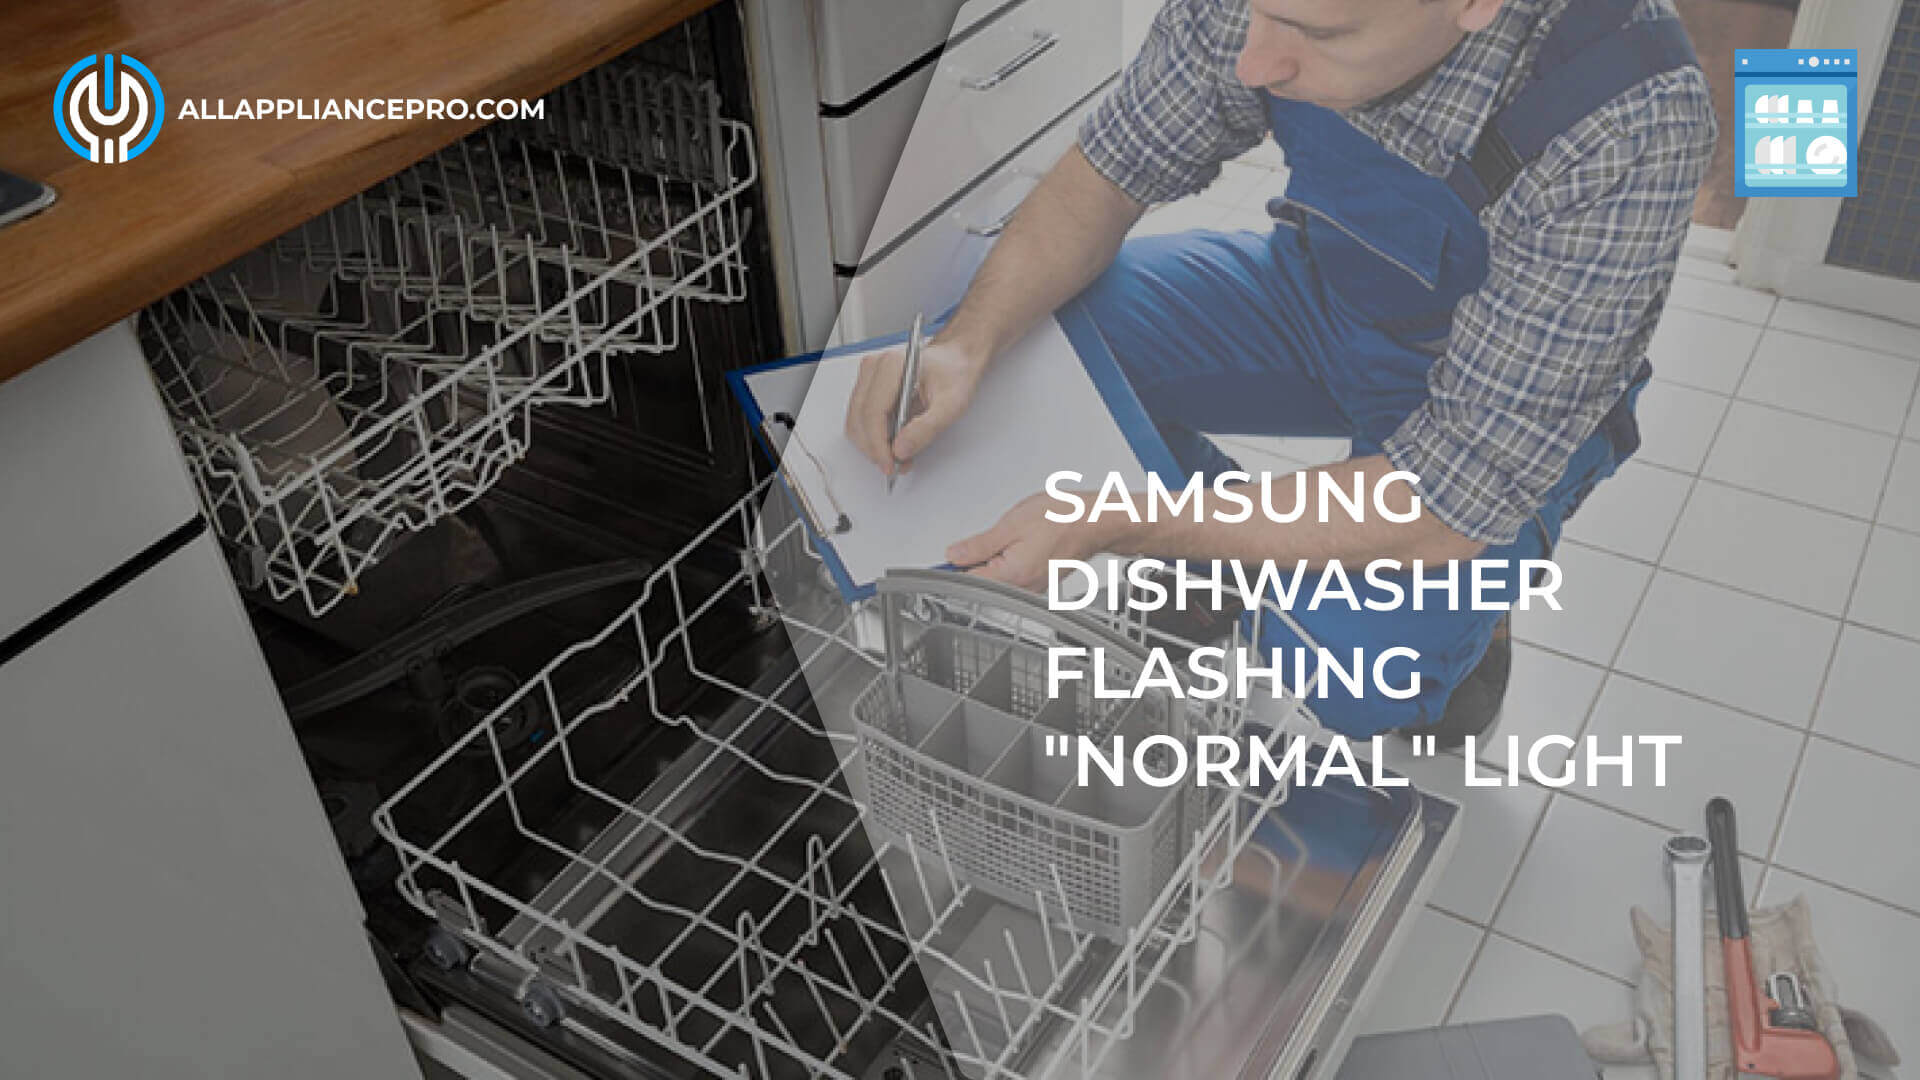 Samsung Dishwasher Flashing "Normal" Light